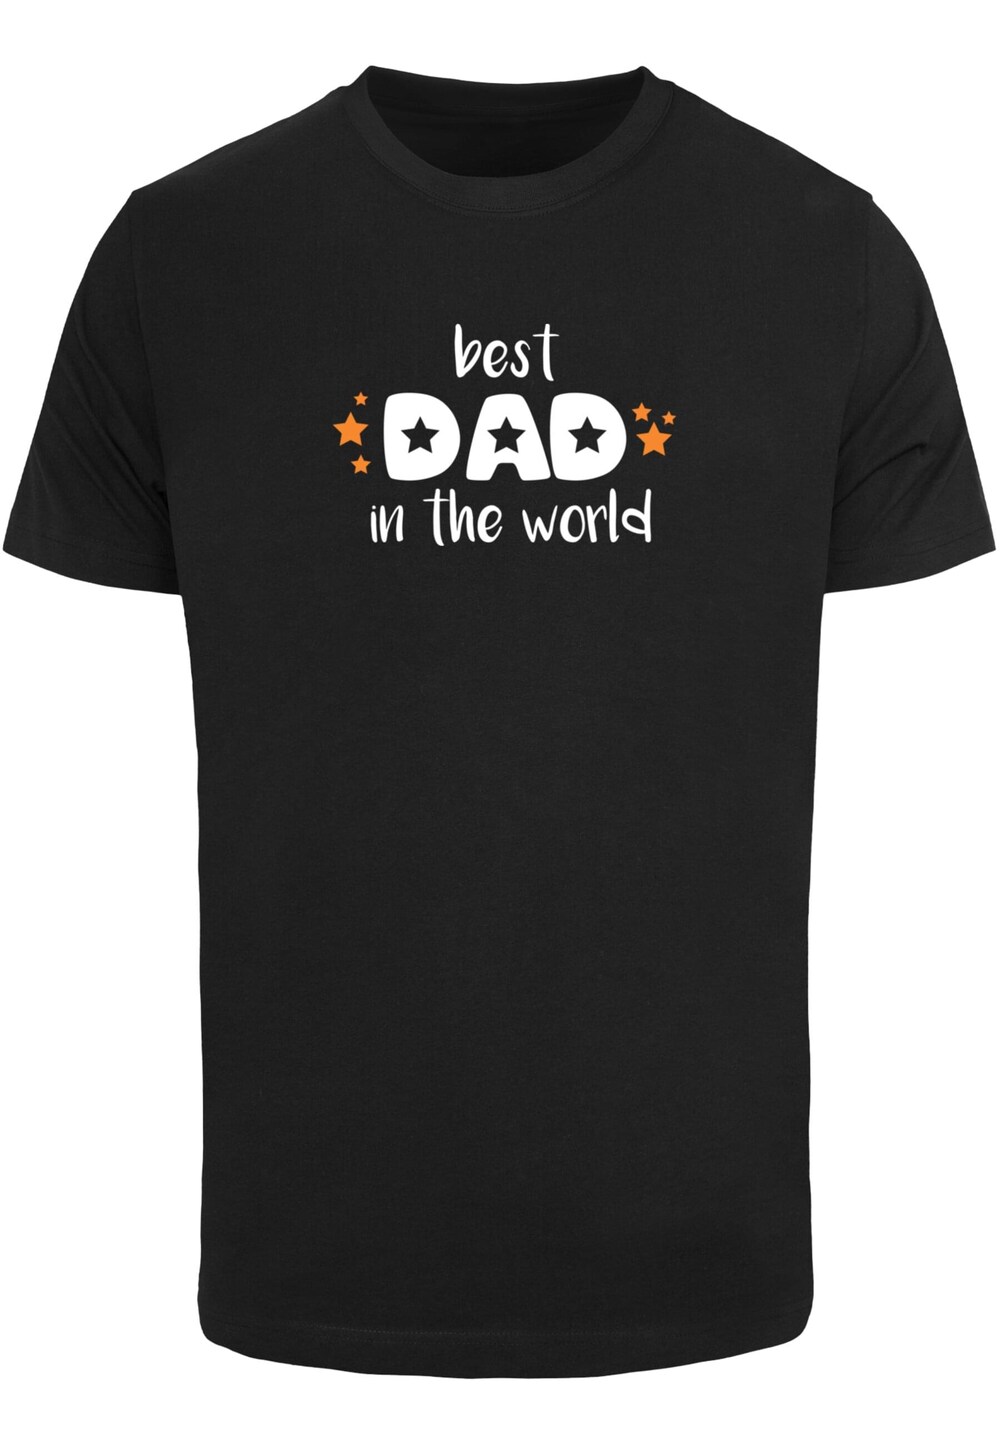 Футболка Merchcode Fathers Day - Best Dad In The World, черный